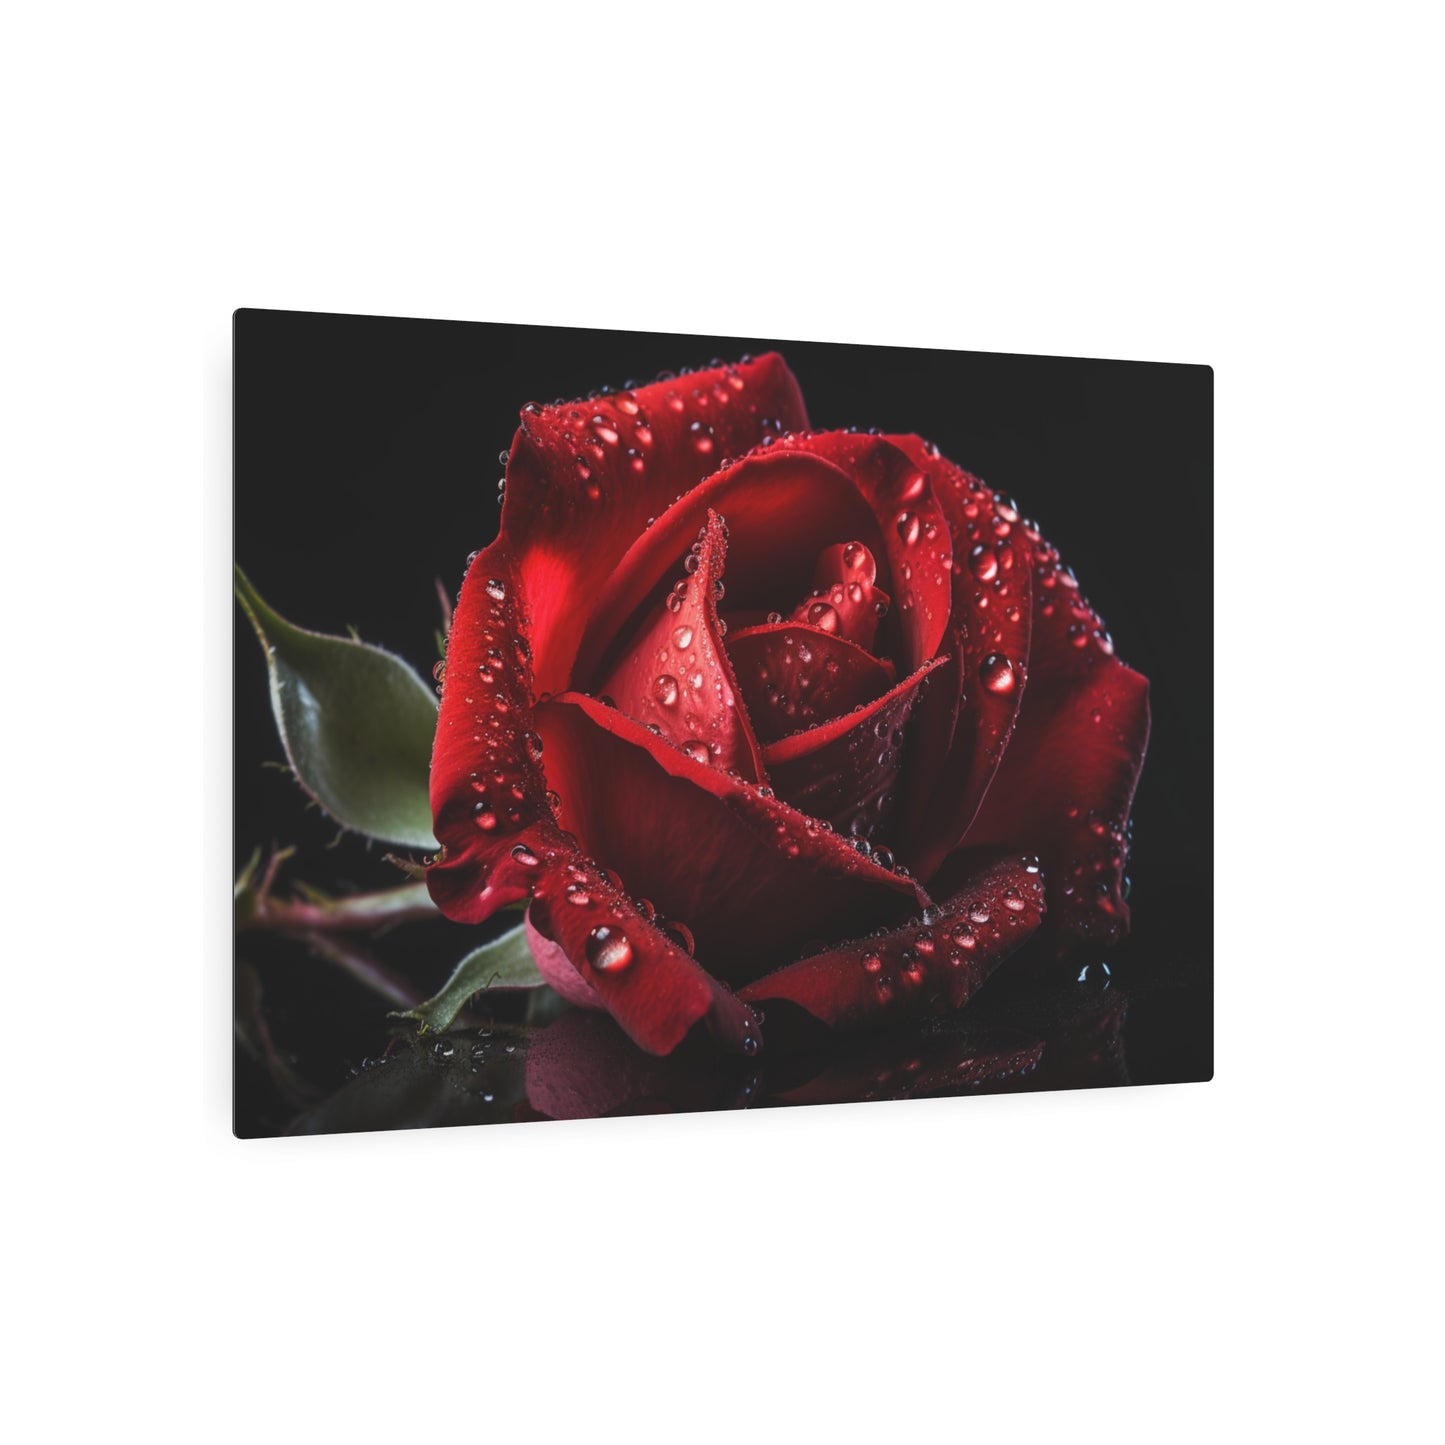 Single Red Rose against black background